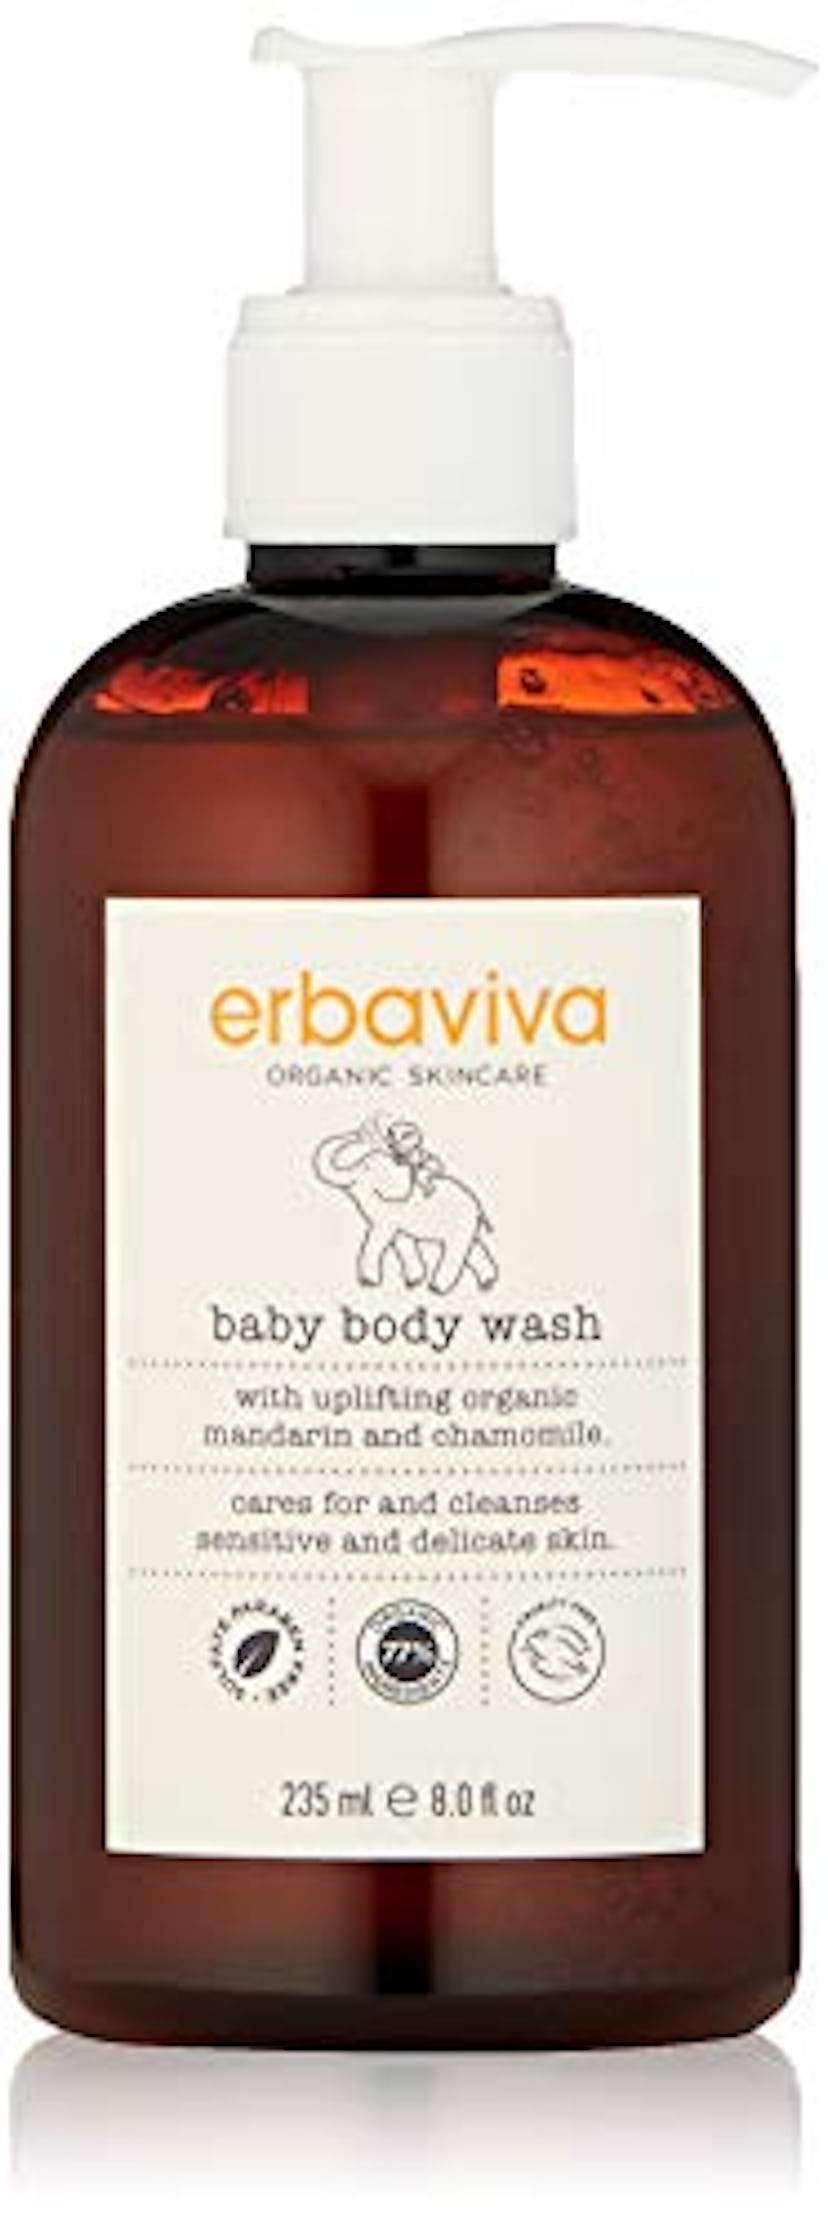 Erbaviva Baby Body Wash